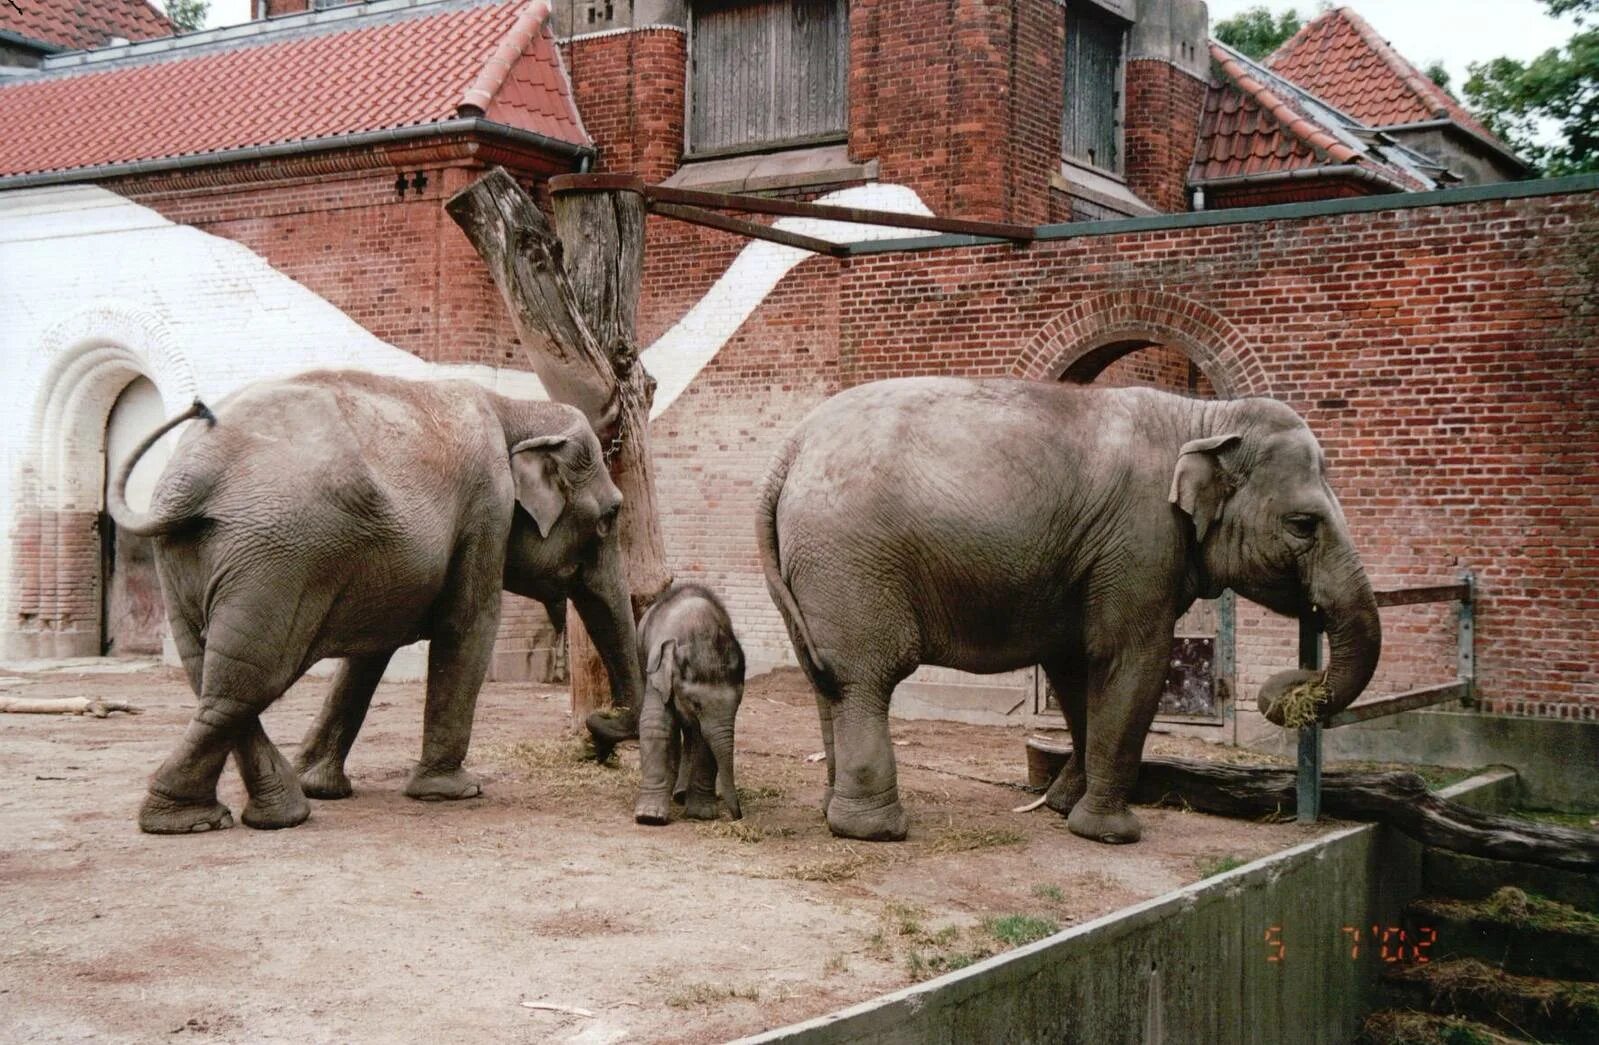 Elephant house. Зоопарк Копенгагена. Жираф Мариус Копенгагенский зоопарк. Дом слонов в Копенгагене. Копенгаген слоны.